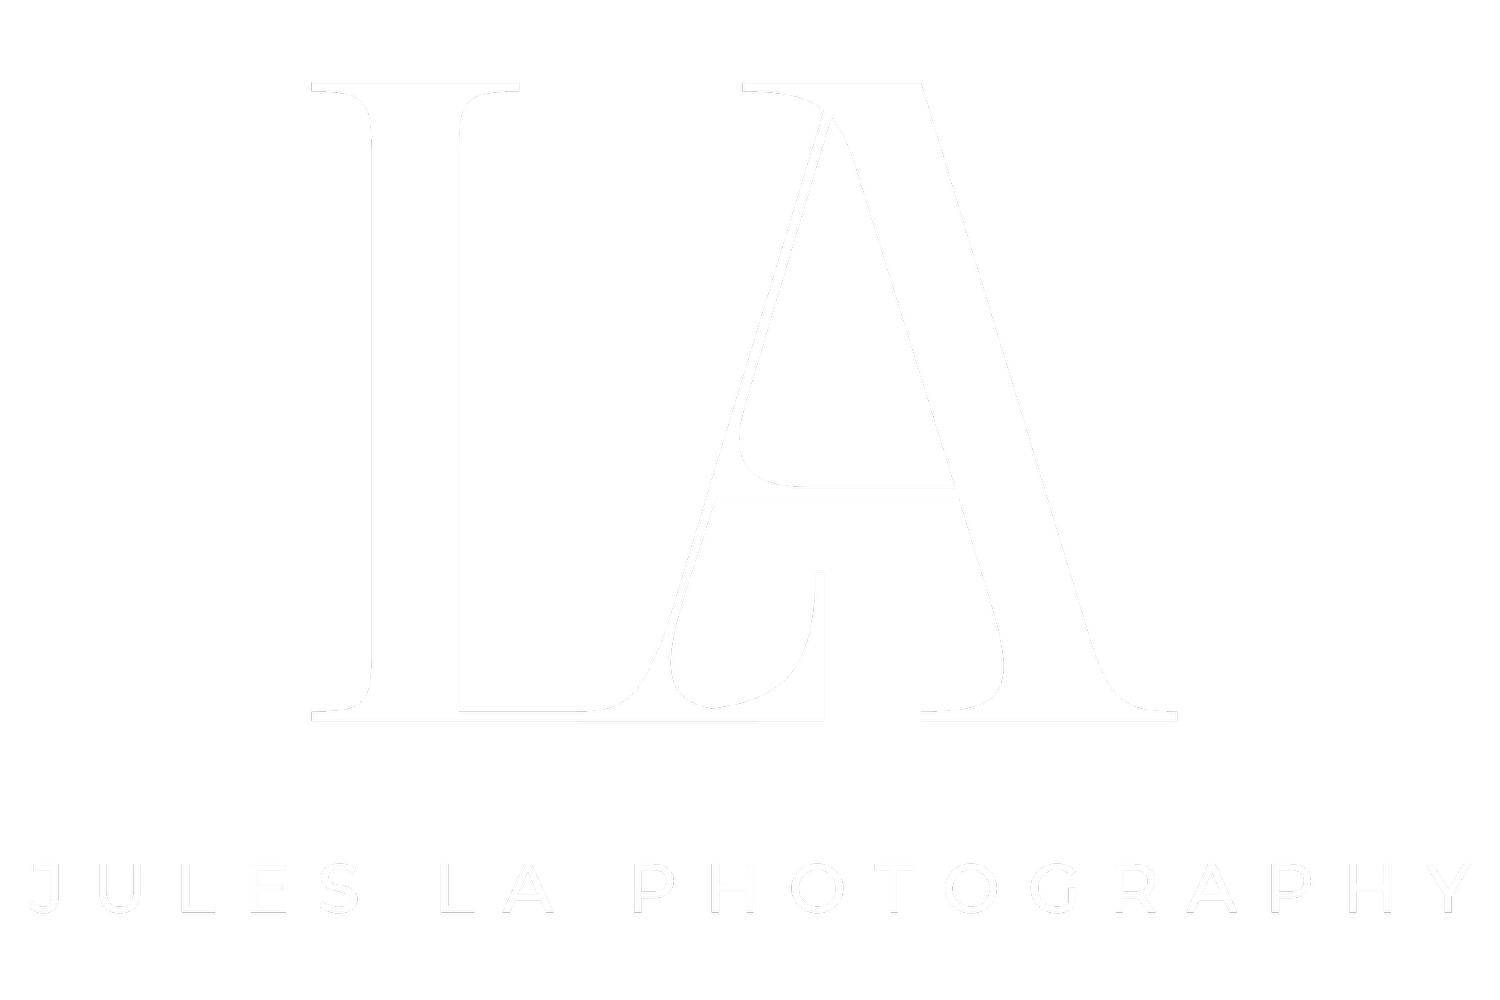 Jules LA Photography